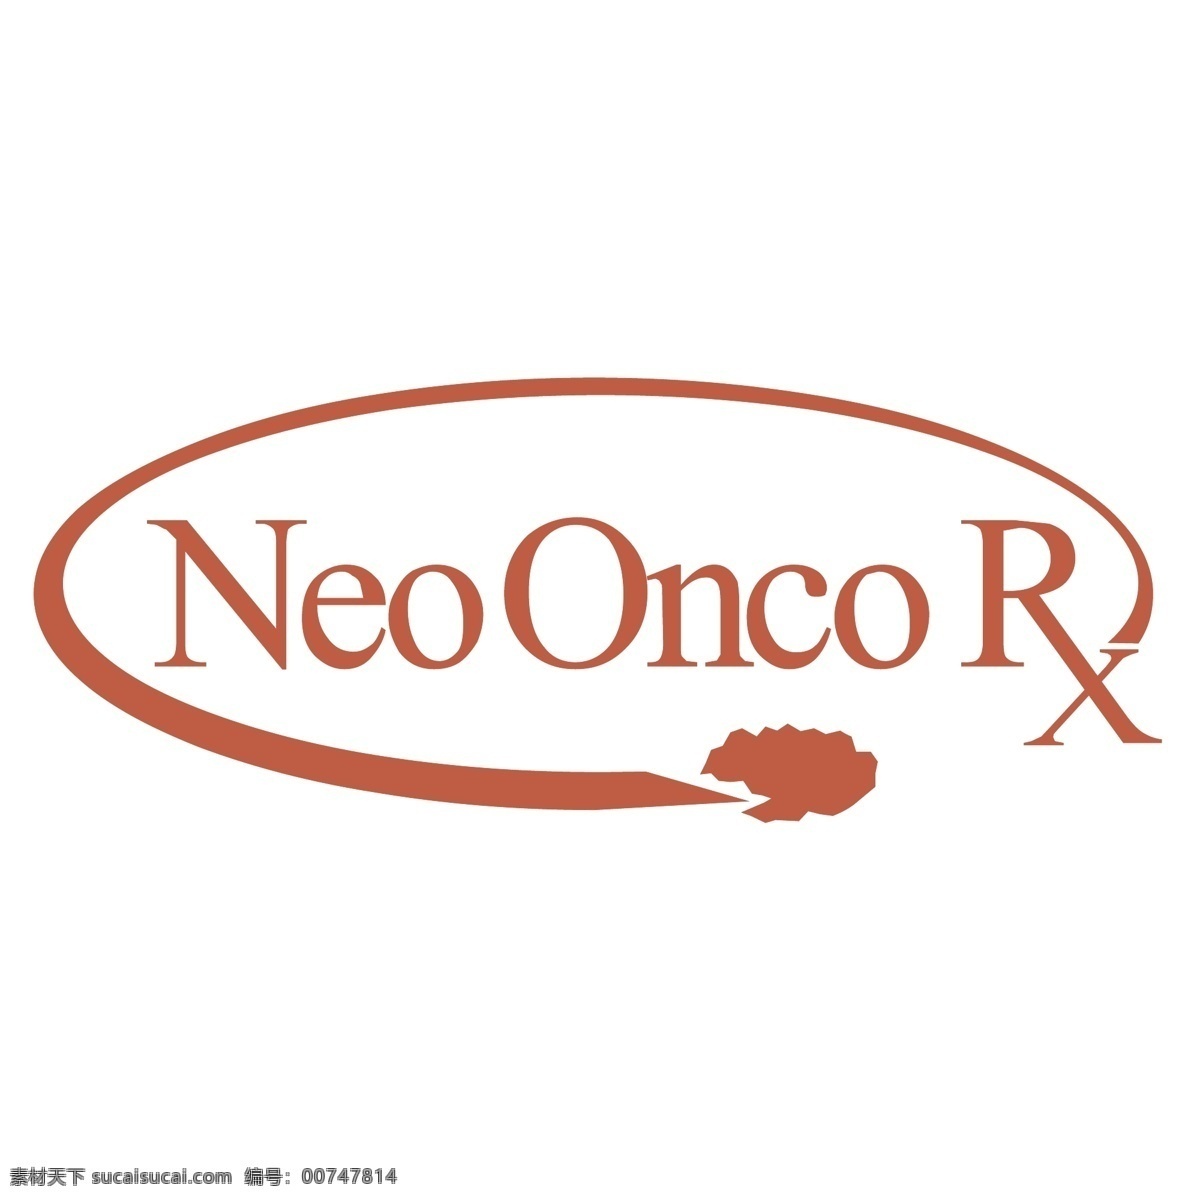 neoonco rx 红色